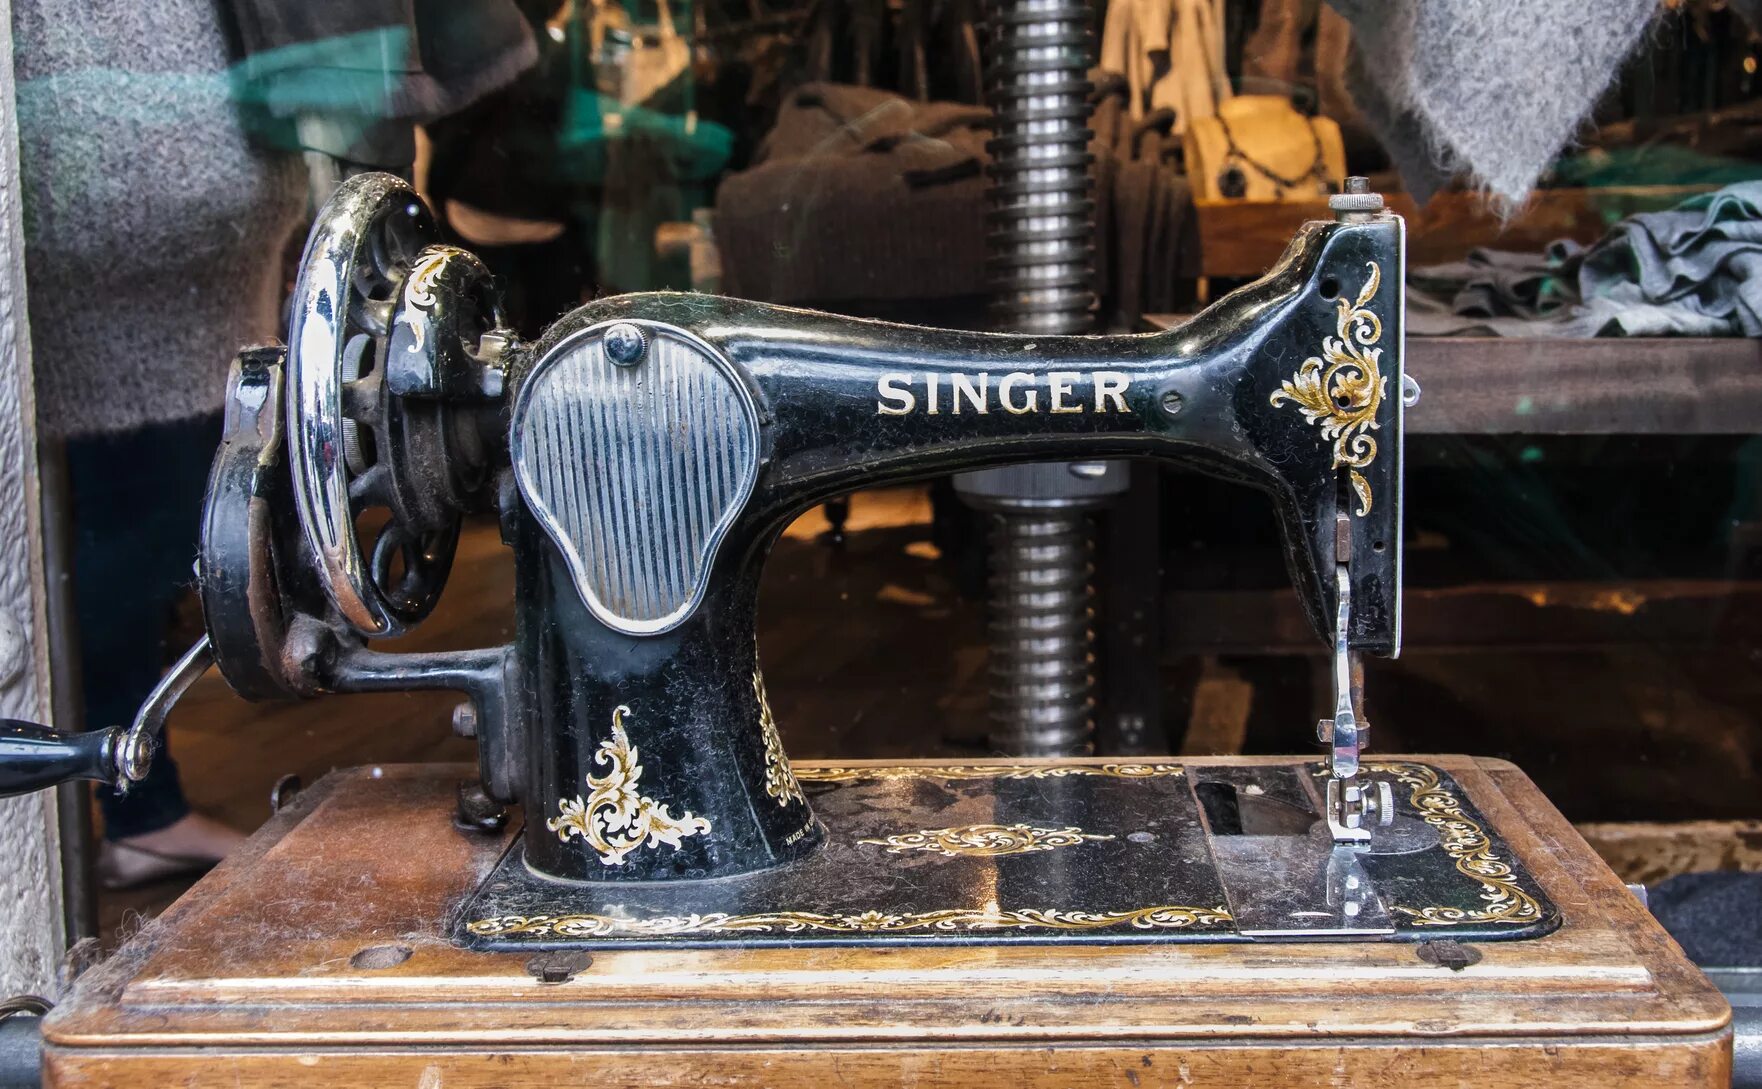 Швейная машинка karingbee. Швейная машинка (Zinger super 2001). Швейная машинка Singer Зингер. Немецкая швейная машинка Зингер 1937. Швейная машинка Зингер 19 век.